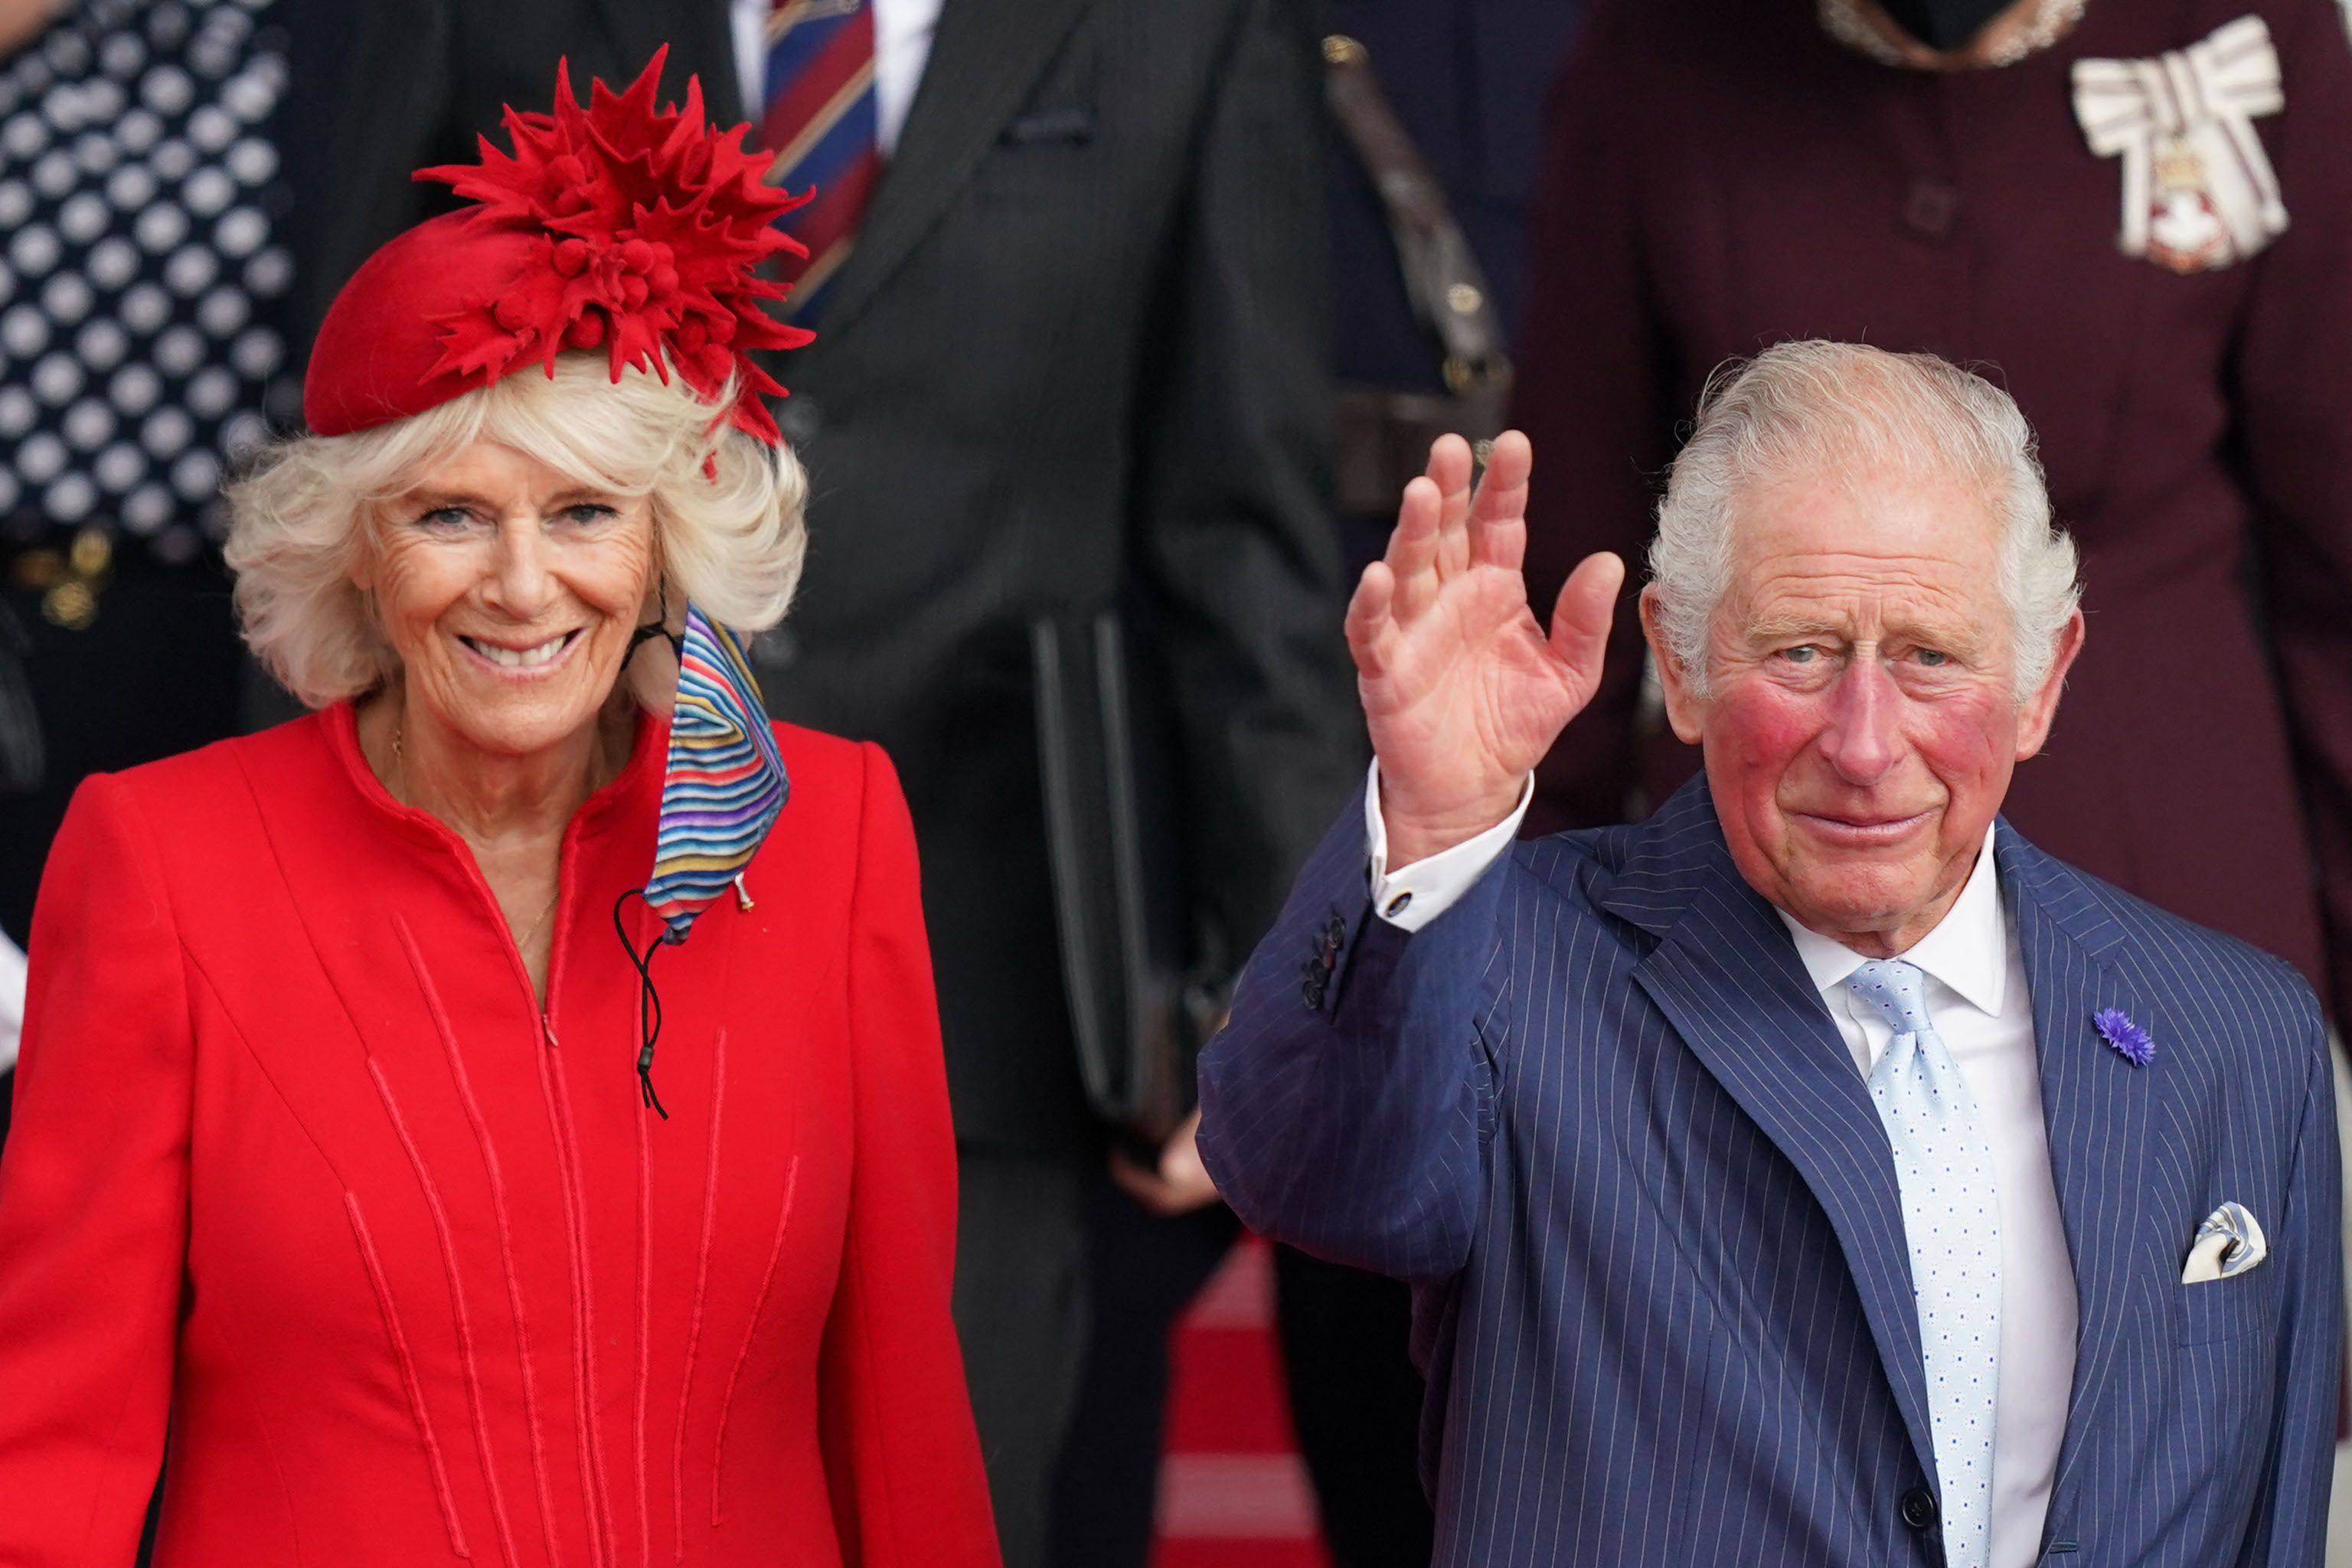 Queen Consort Camilla follows Queen Elizabeth's style precedent with famous  accessory